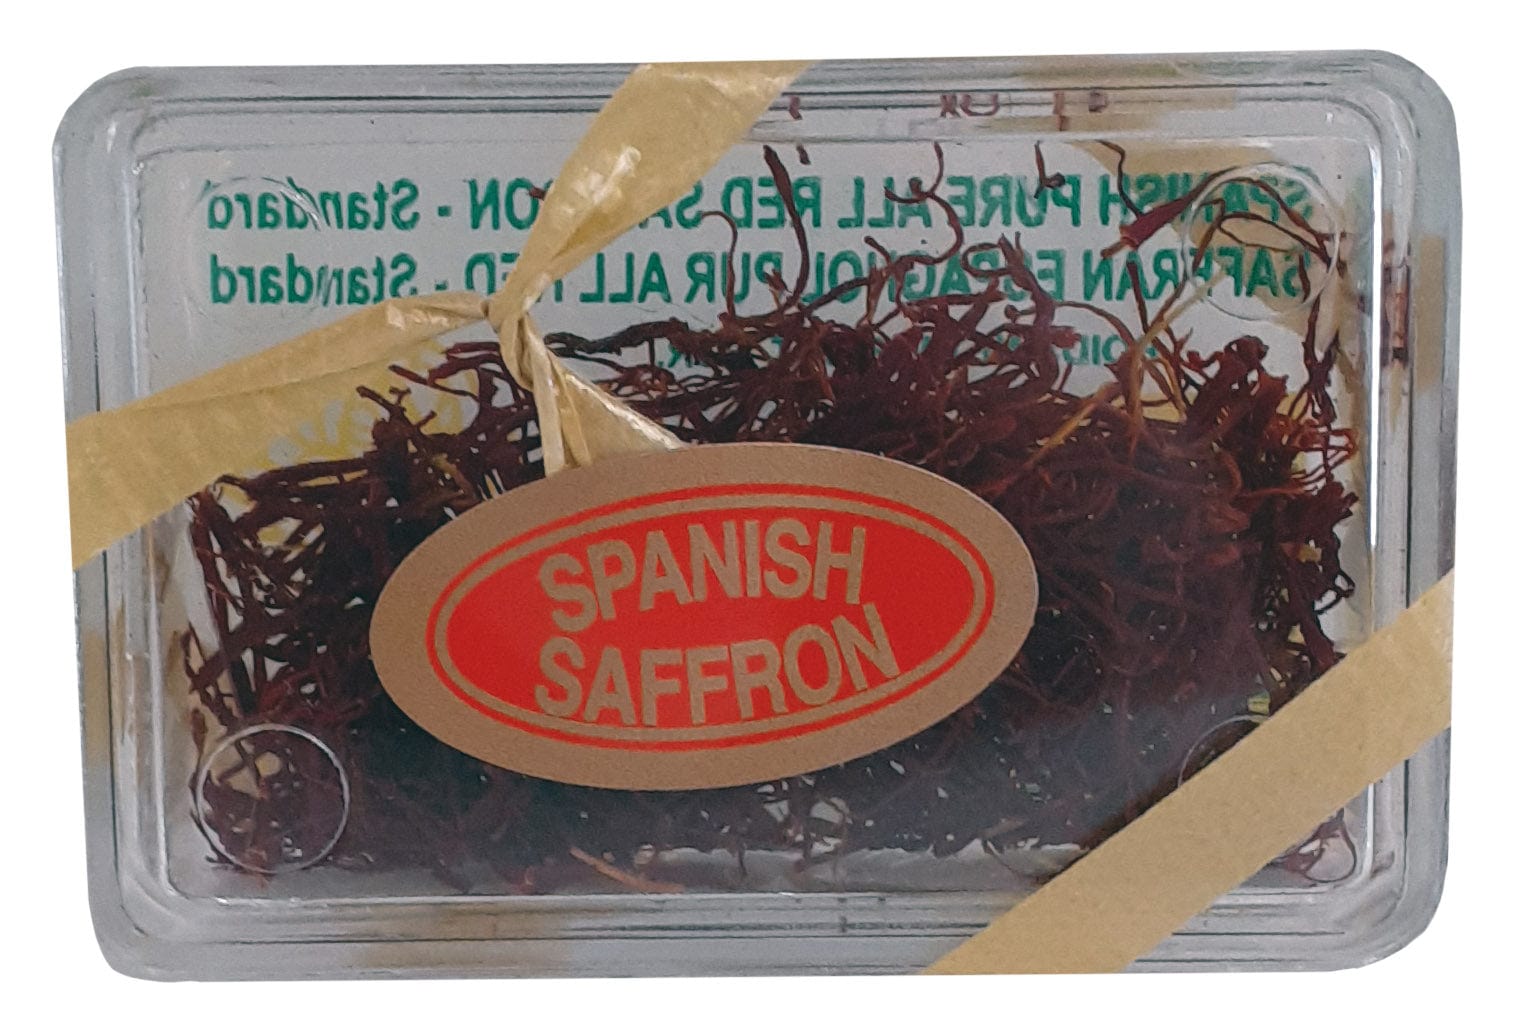 YUPIK Épicerie Safran espagnol pur rouge 1gr